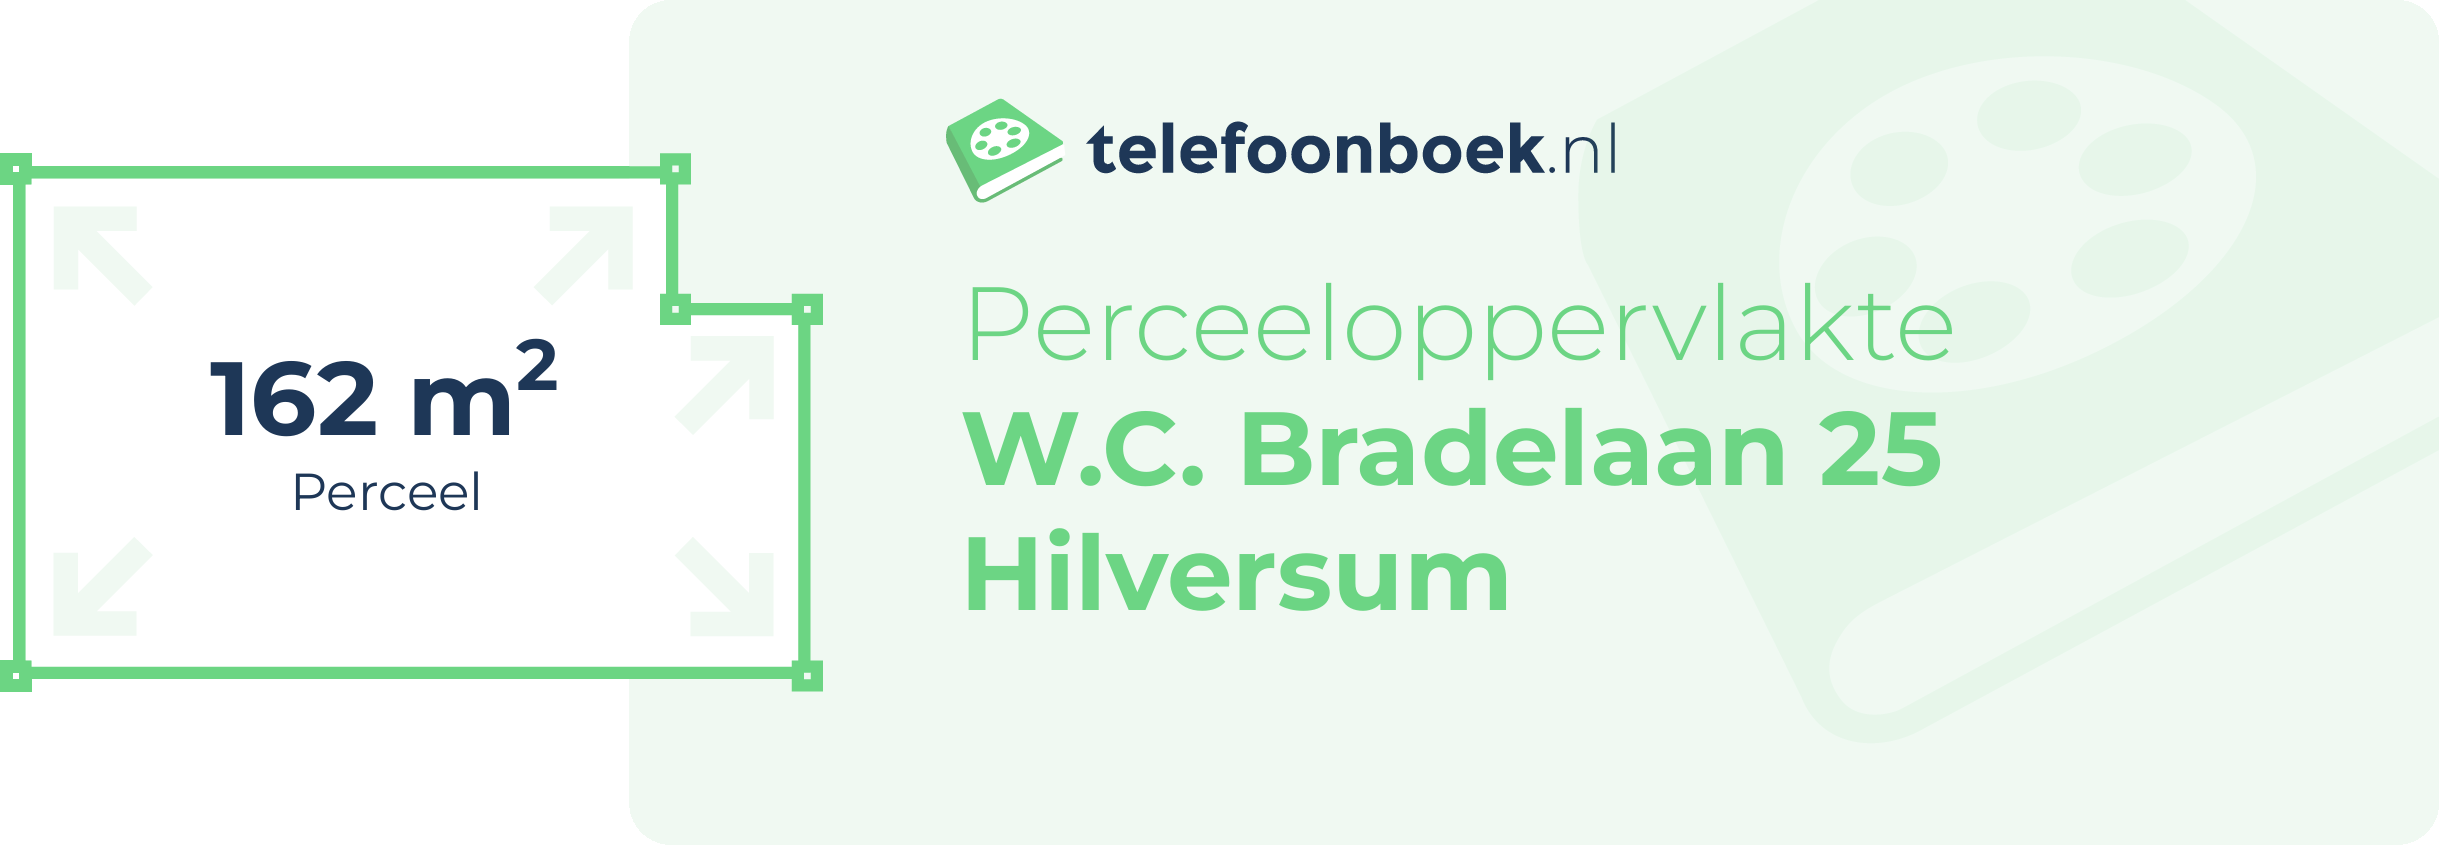 Perceeloppervlakte W.C. Bradelaan 25 Hilversum